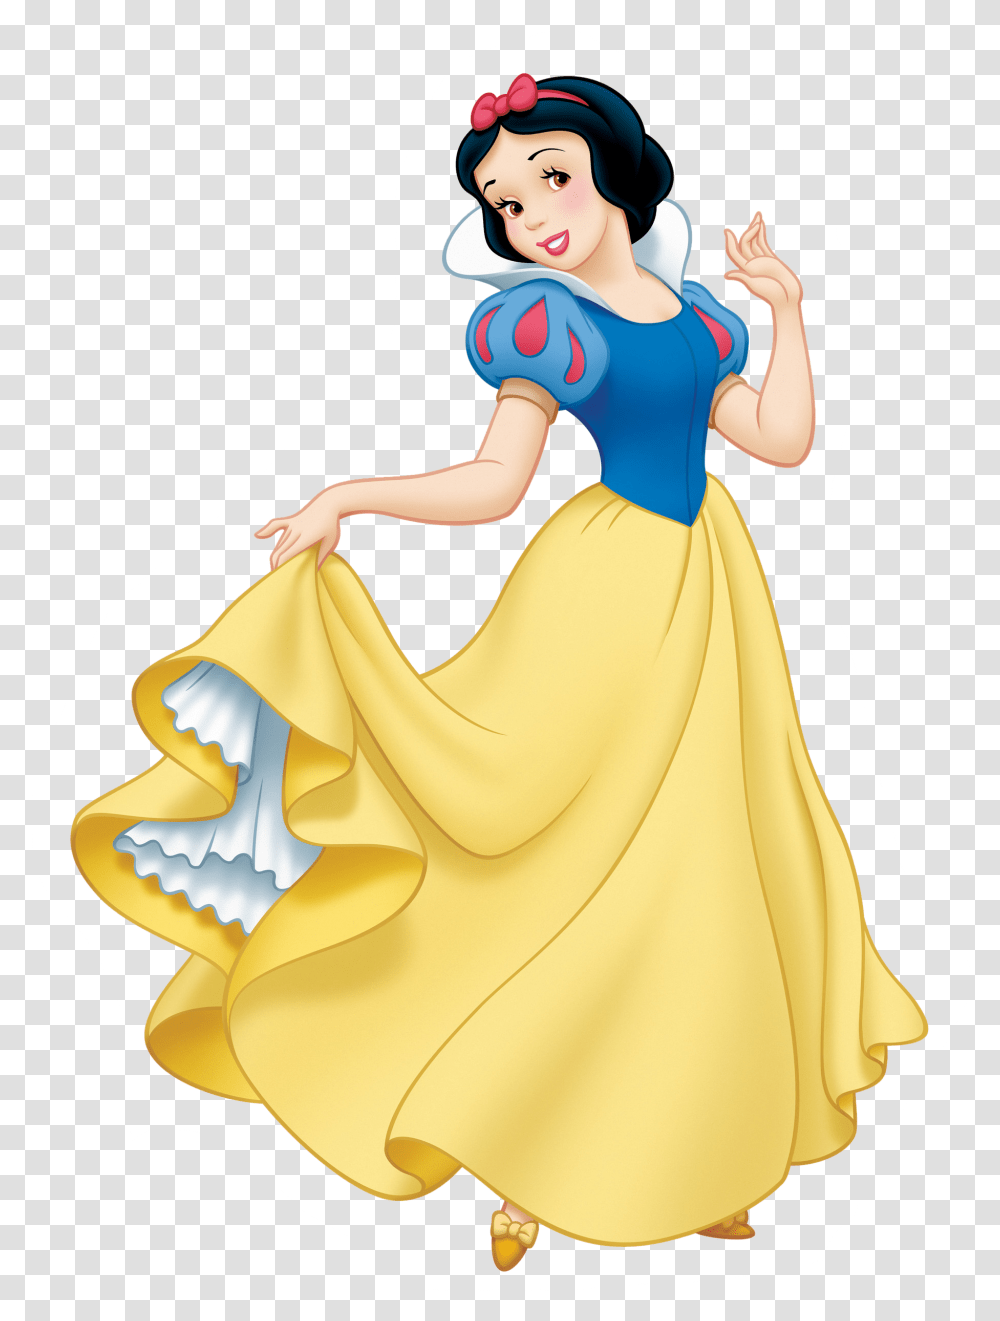 Snow White Dress Cartoon, Dance Pose, Leisure Activities, Performer Transparent Png